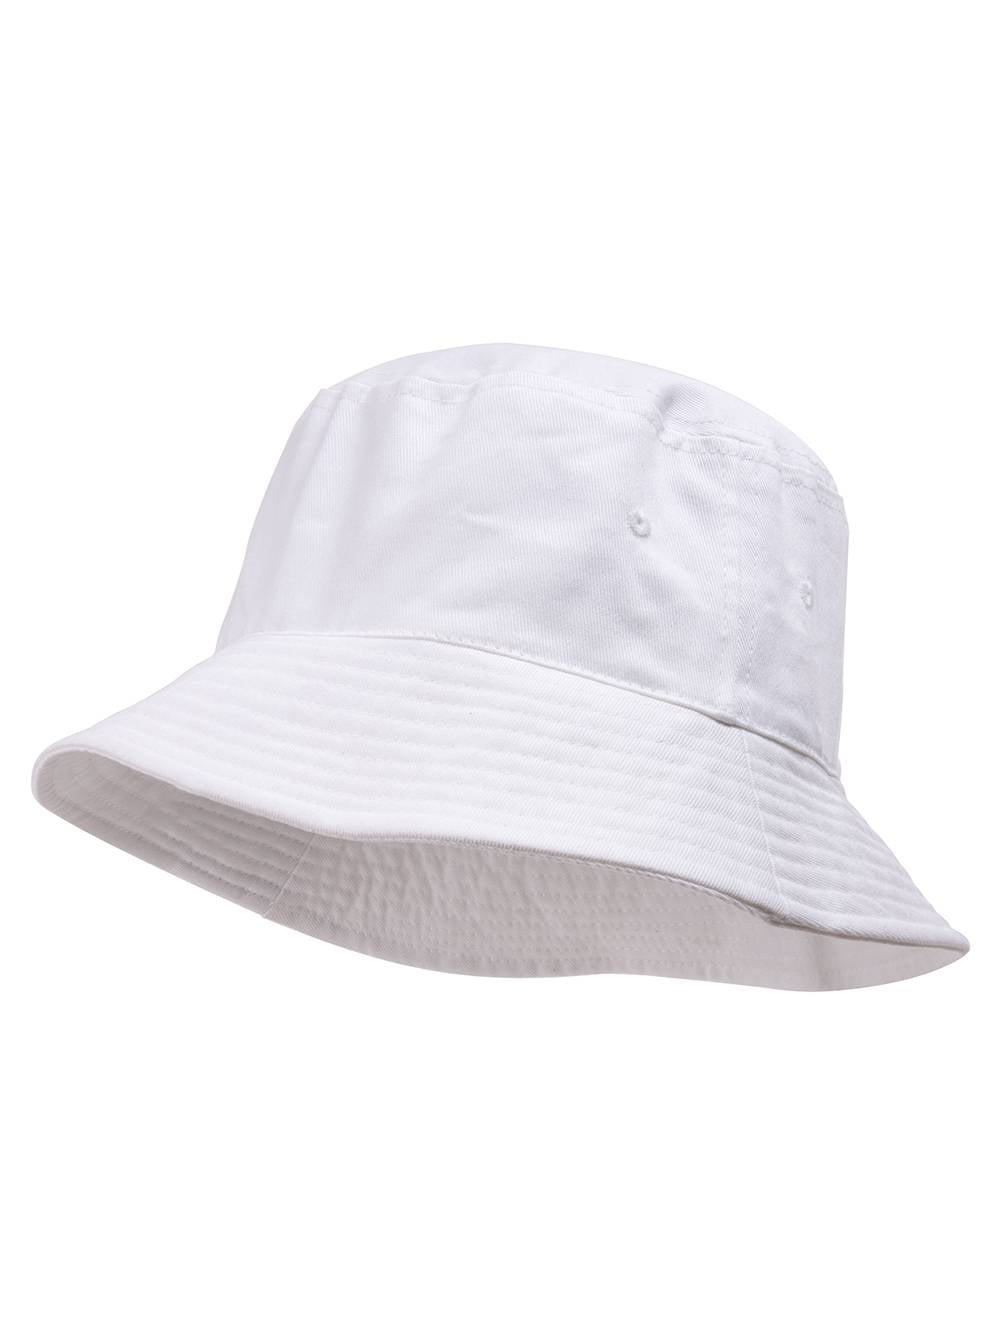 terugtrekken gangpad De databank TopHeadwear Blank Cotton Bucket Hat - White - Small/Medium - Walmart.com